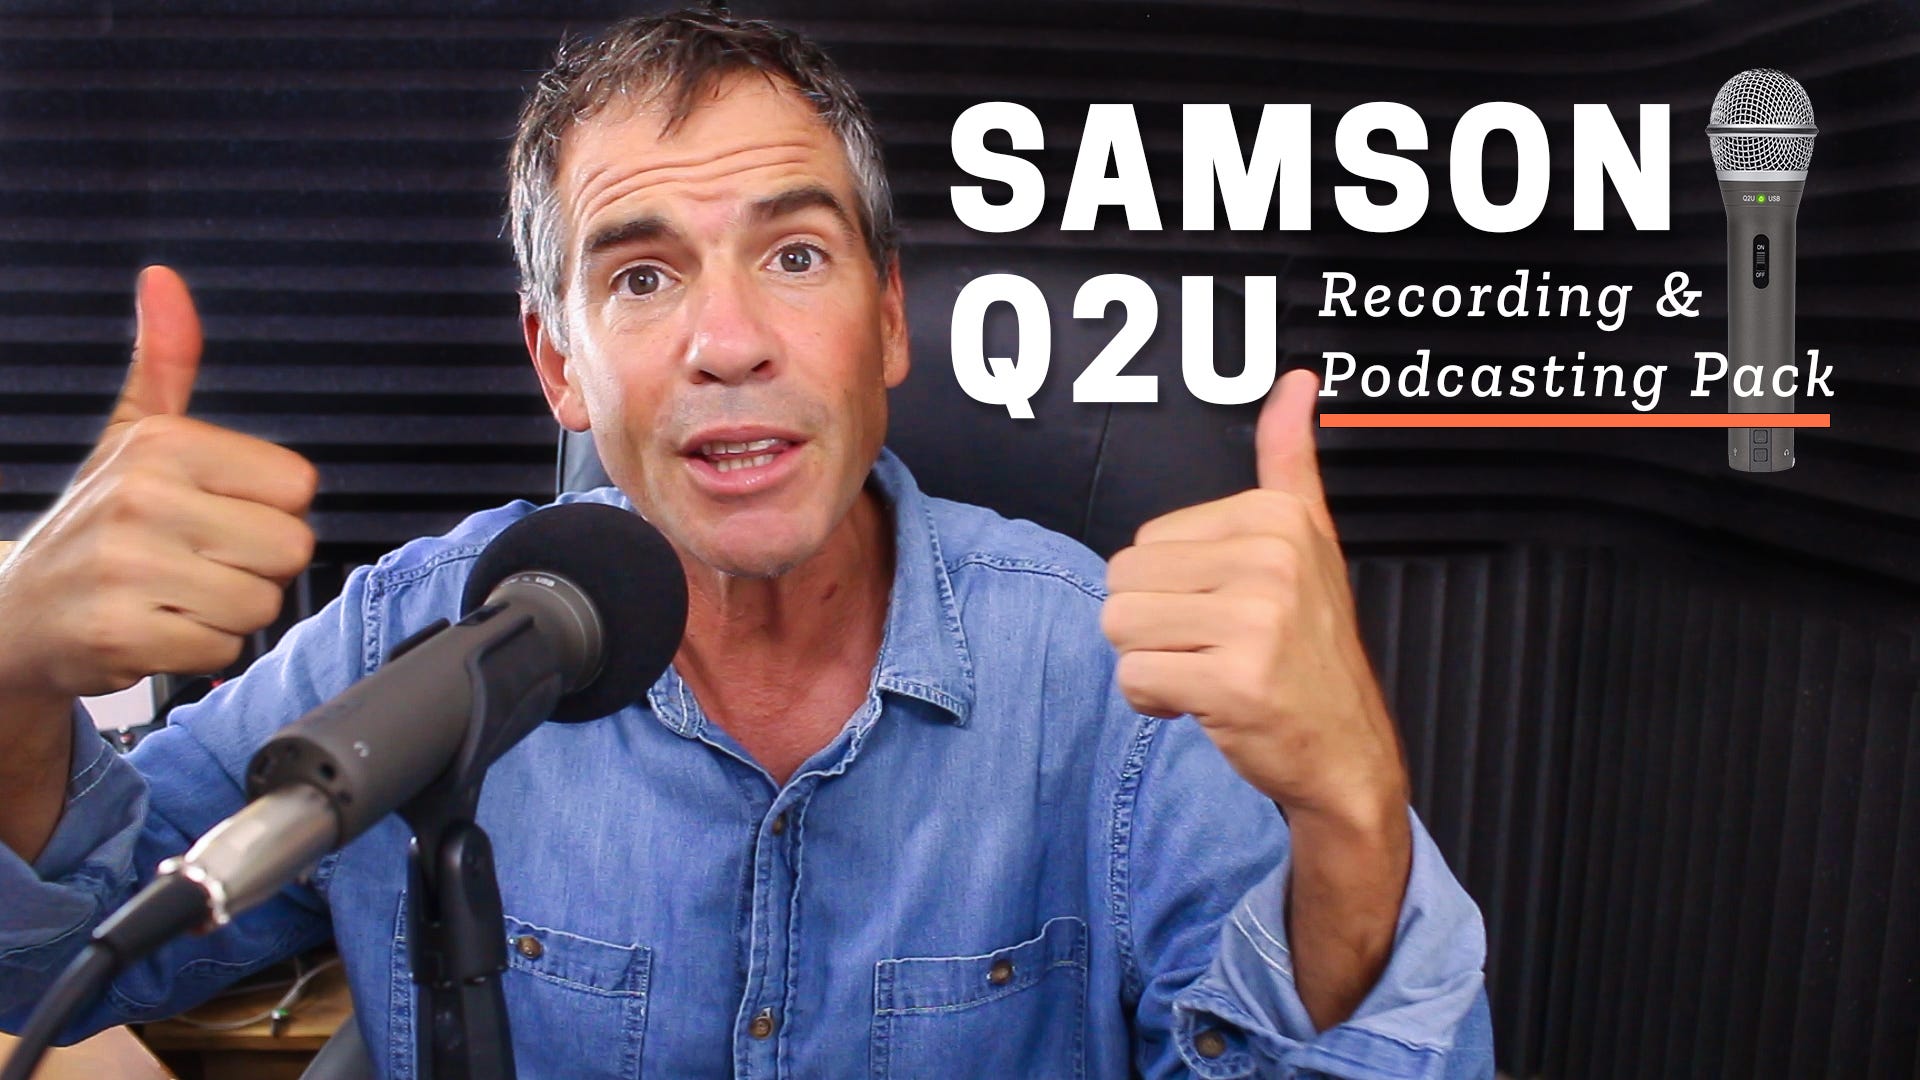 Samson q2u • Compare (6 products) find best prices »